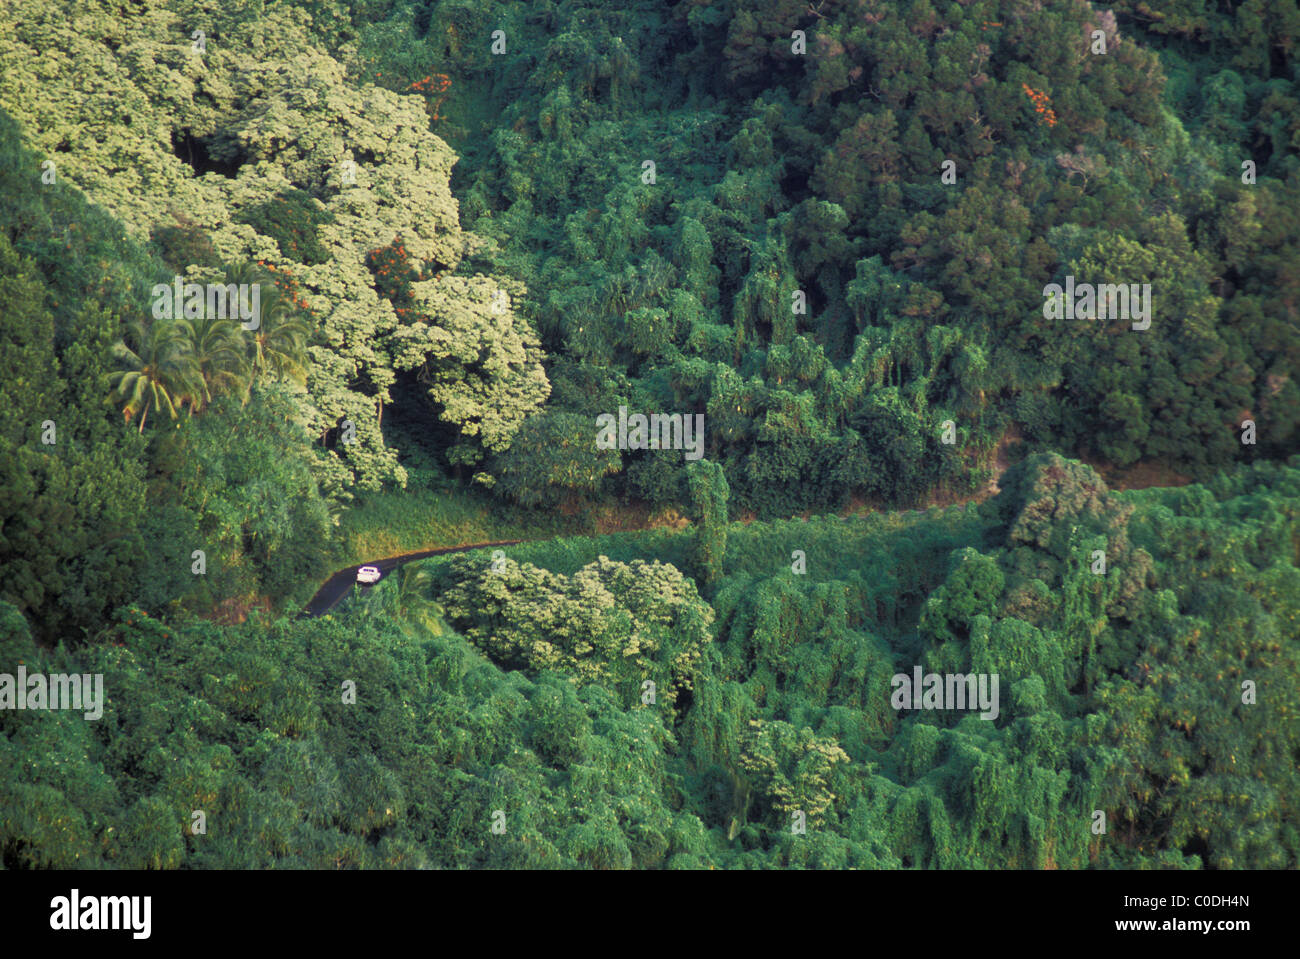 Hana highway e la foresta tropicale; Hana costa, Maui, Hawaii. Foto Stock